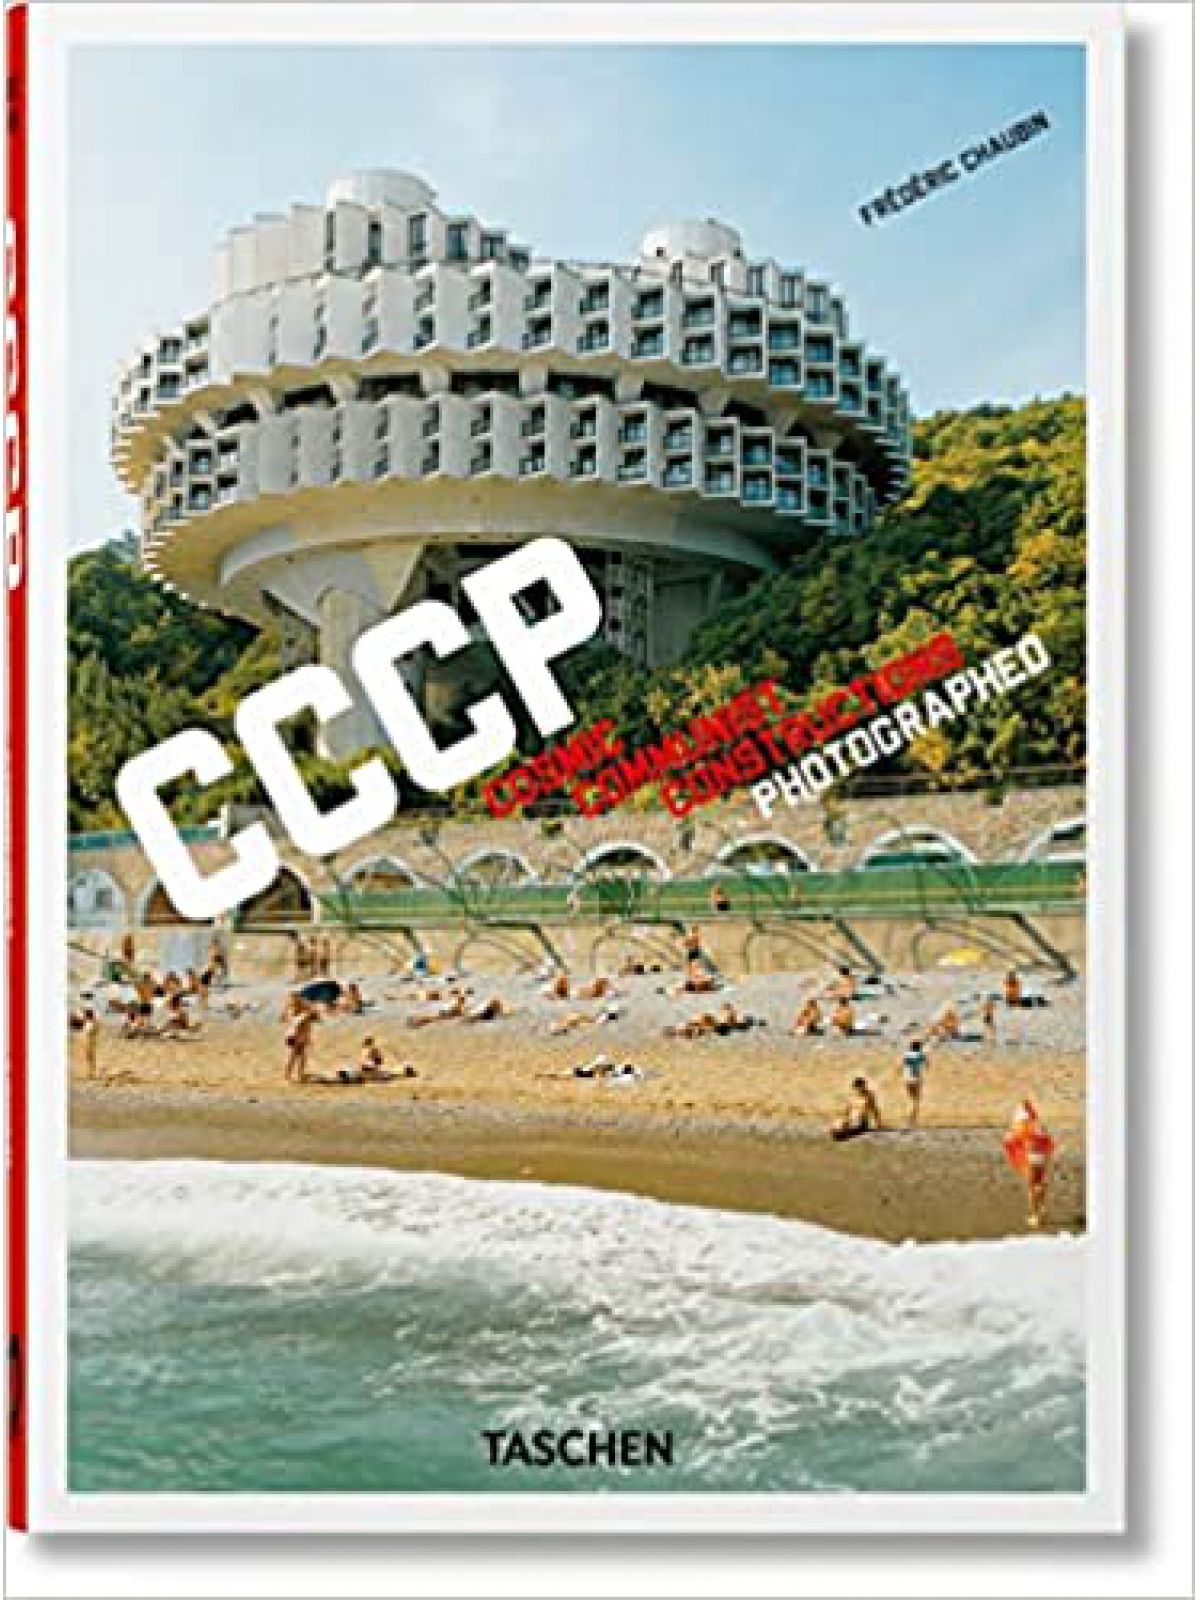 40-CHAUBIN CCCP-INT  Купить Книгу на Английском